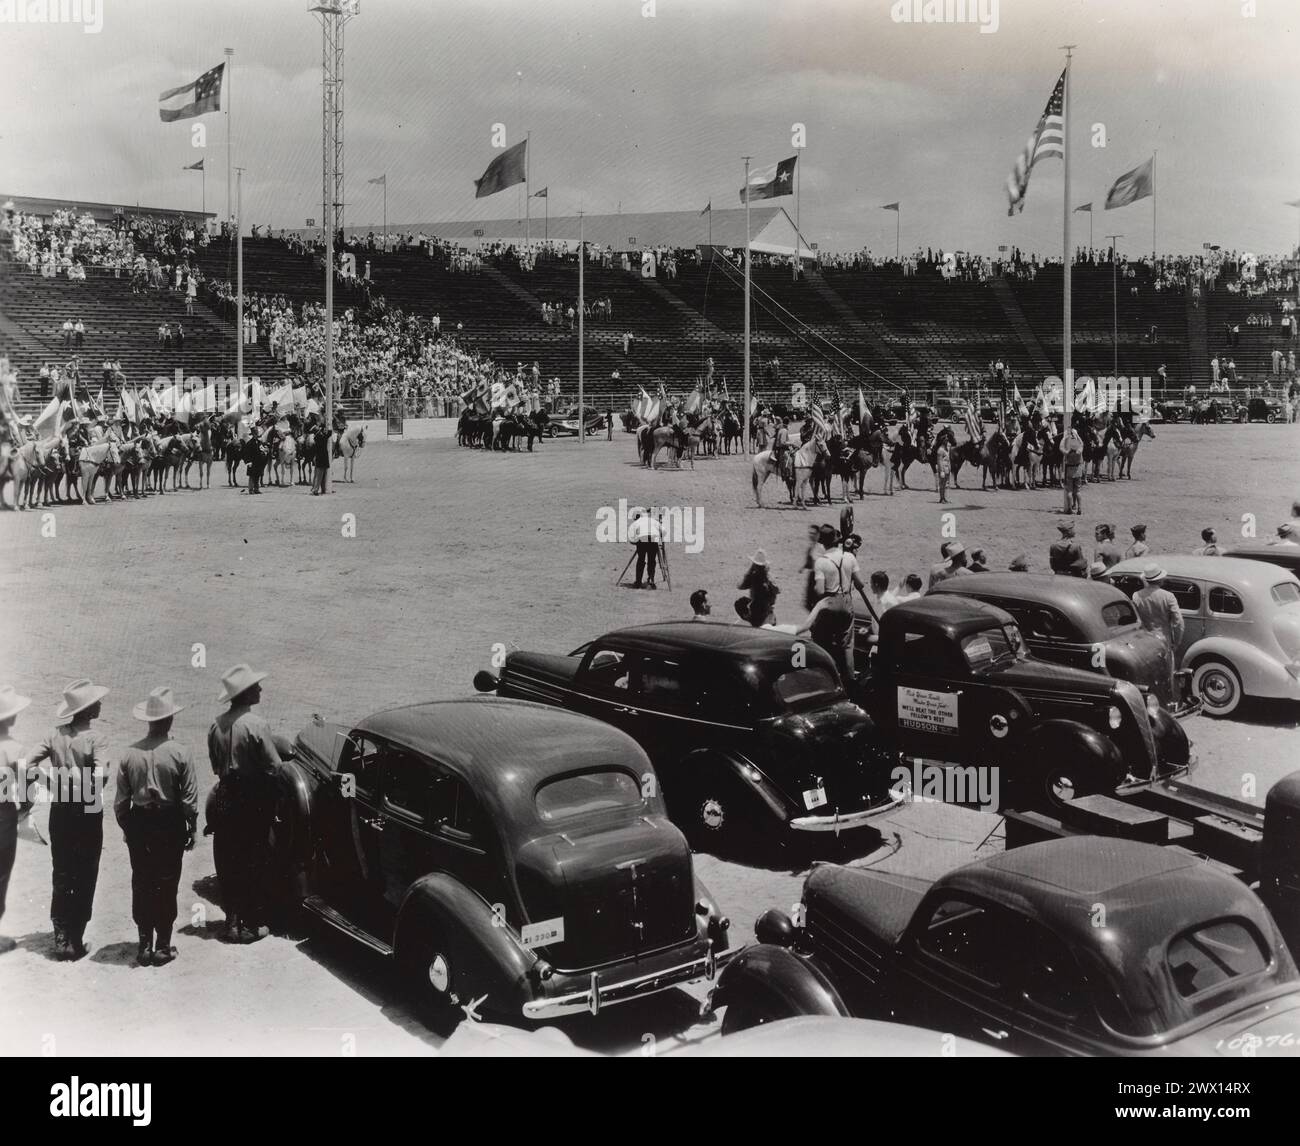 Texas Centennial, Dallas, Texas, 6.-12. Juni 1936. Männer der US-Armee Putting Up the Stars & Stripes – Flaggenzeremonien ca. Juni 1936 Stockfoto